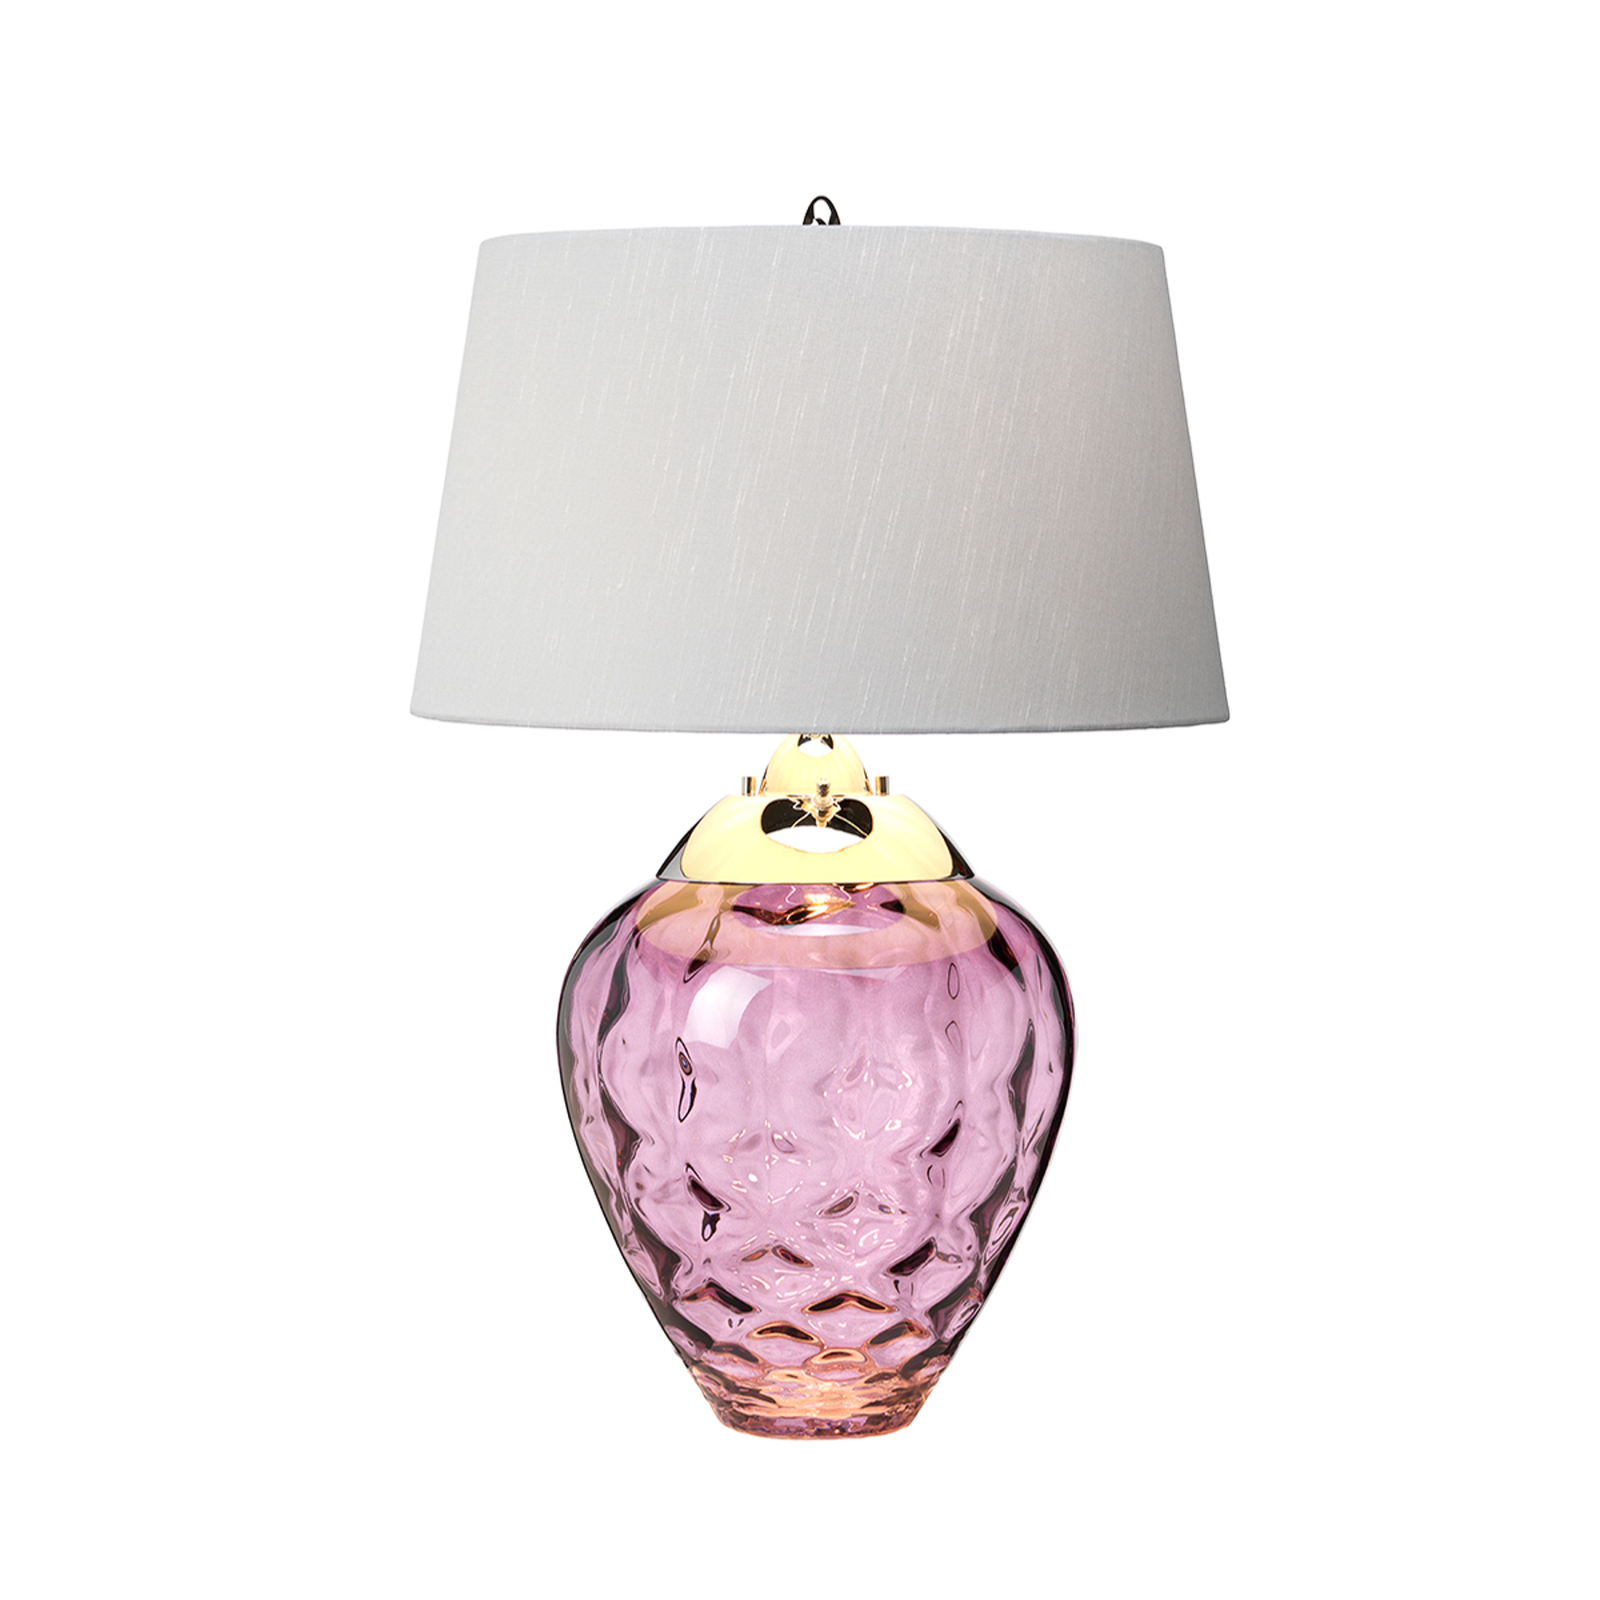 Samara tafellamp, Ø 45,7 cm, roze, stof, glas, 2-lamps